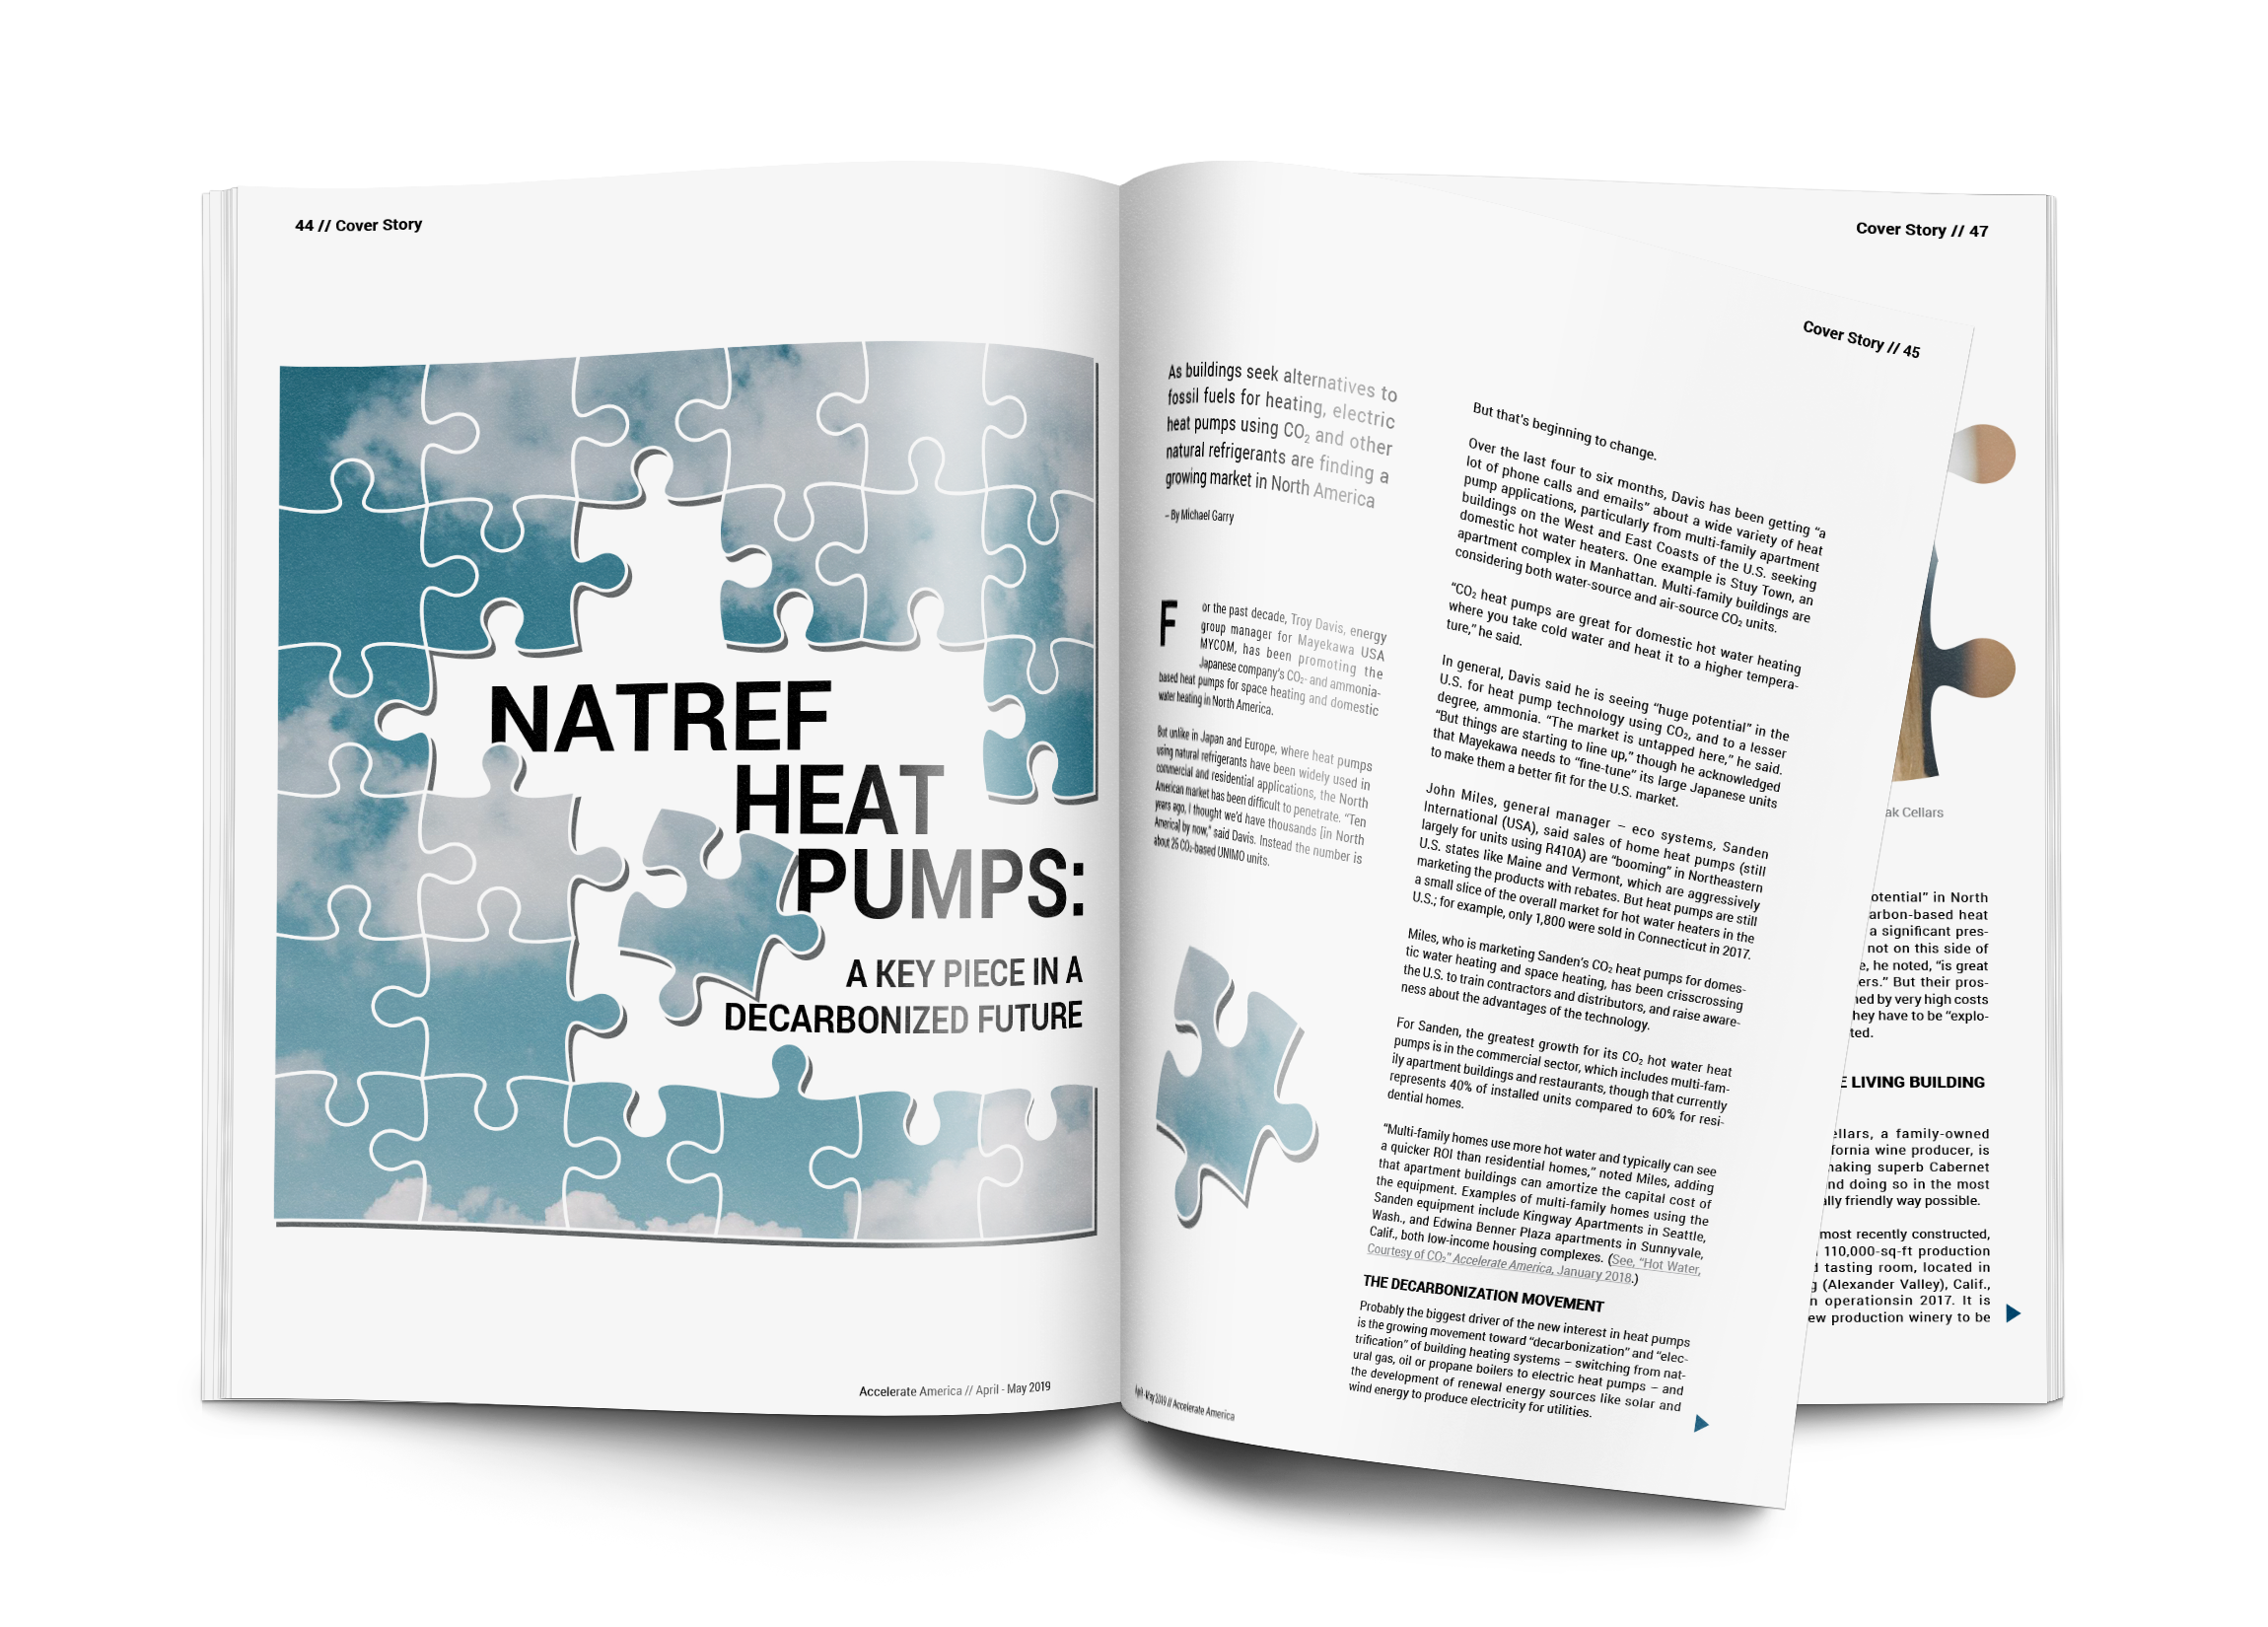 NatRef Heat Pumps: A Key Piece in a Decarbonized Future